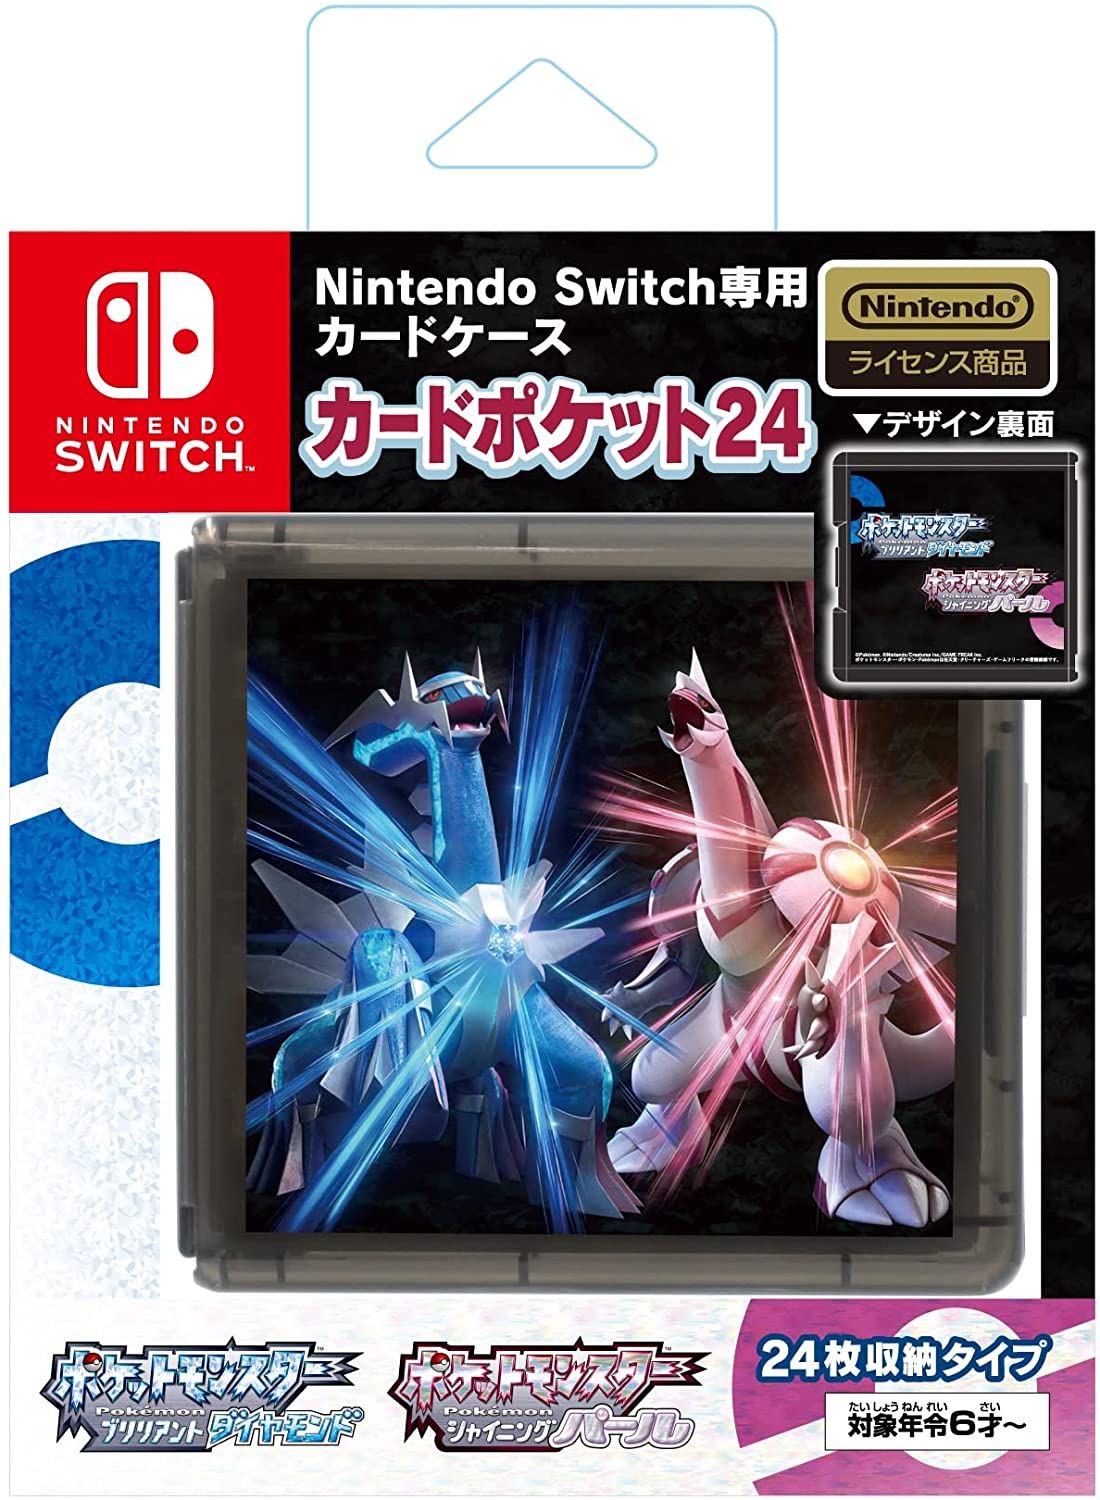 Pocket monster Pokémon Brilliant Diamond - Nintendo Switch NS Multilingual  support